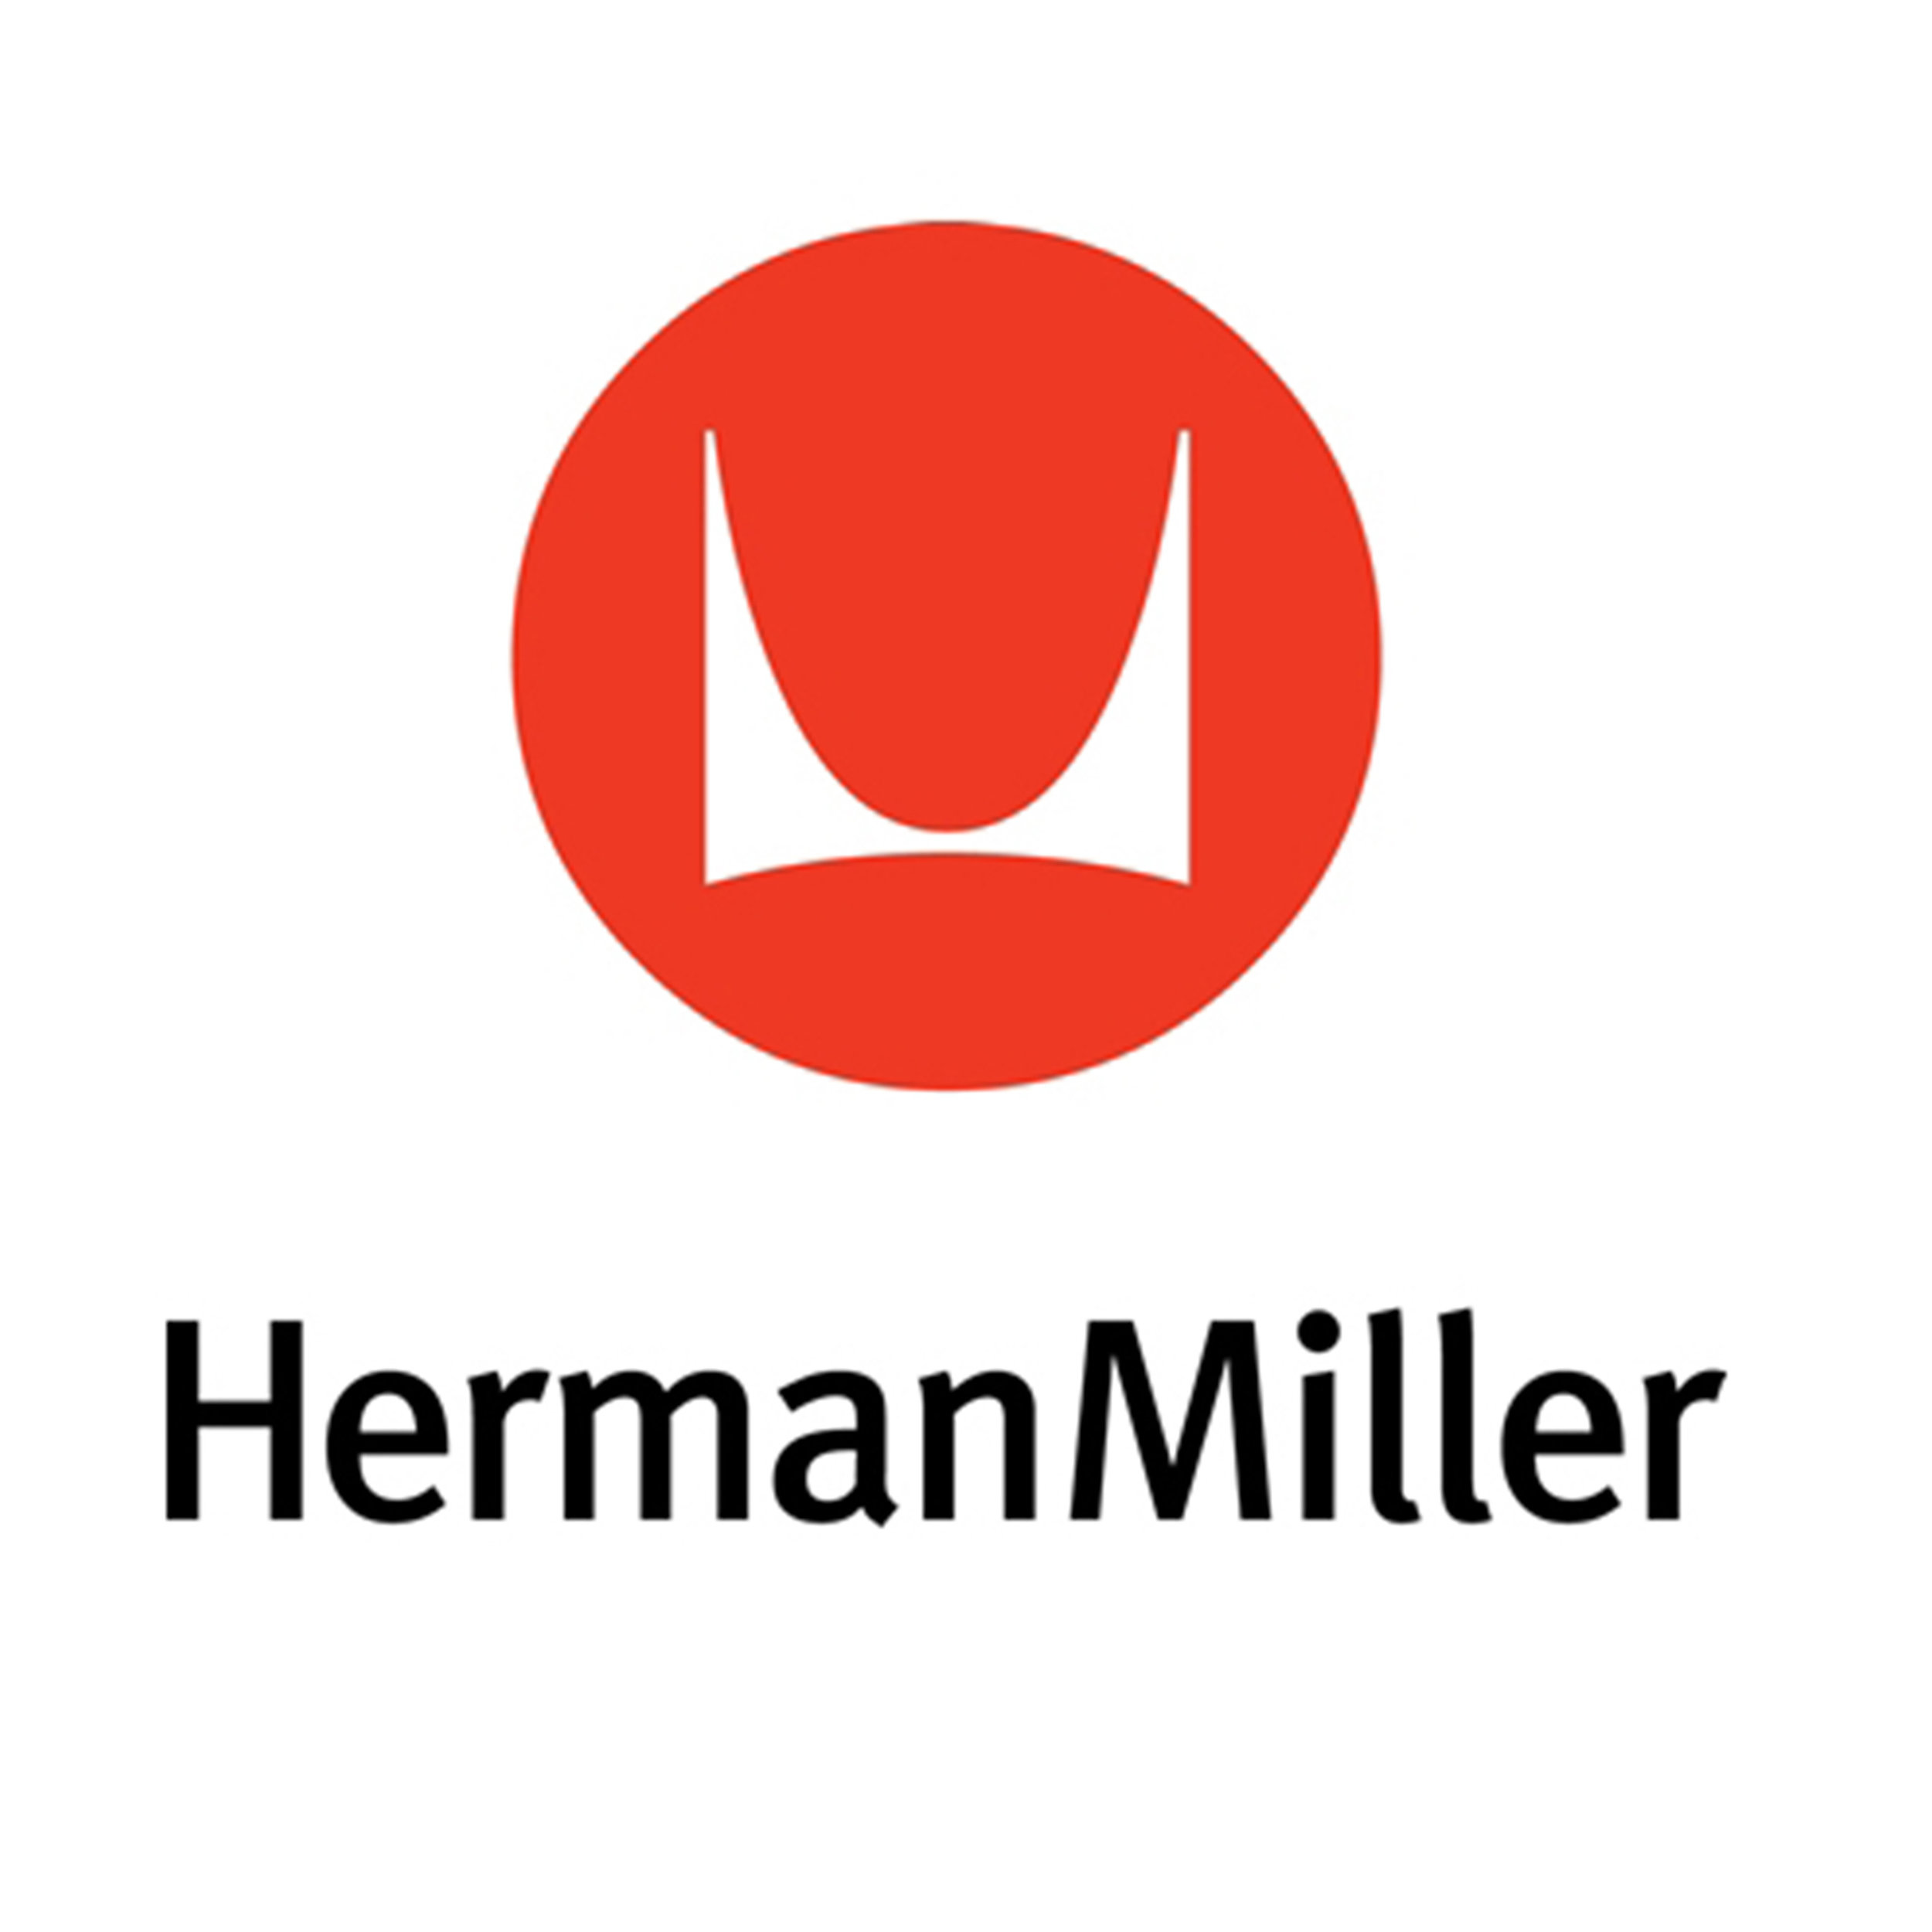 Herman Miller.jpg